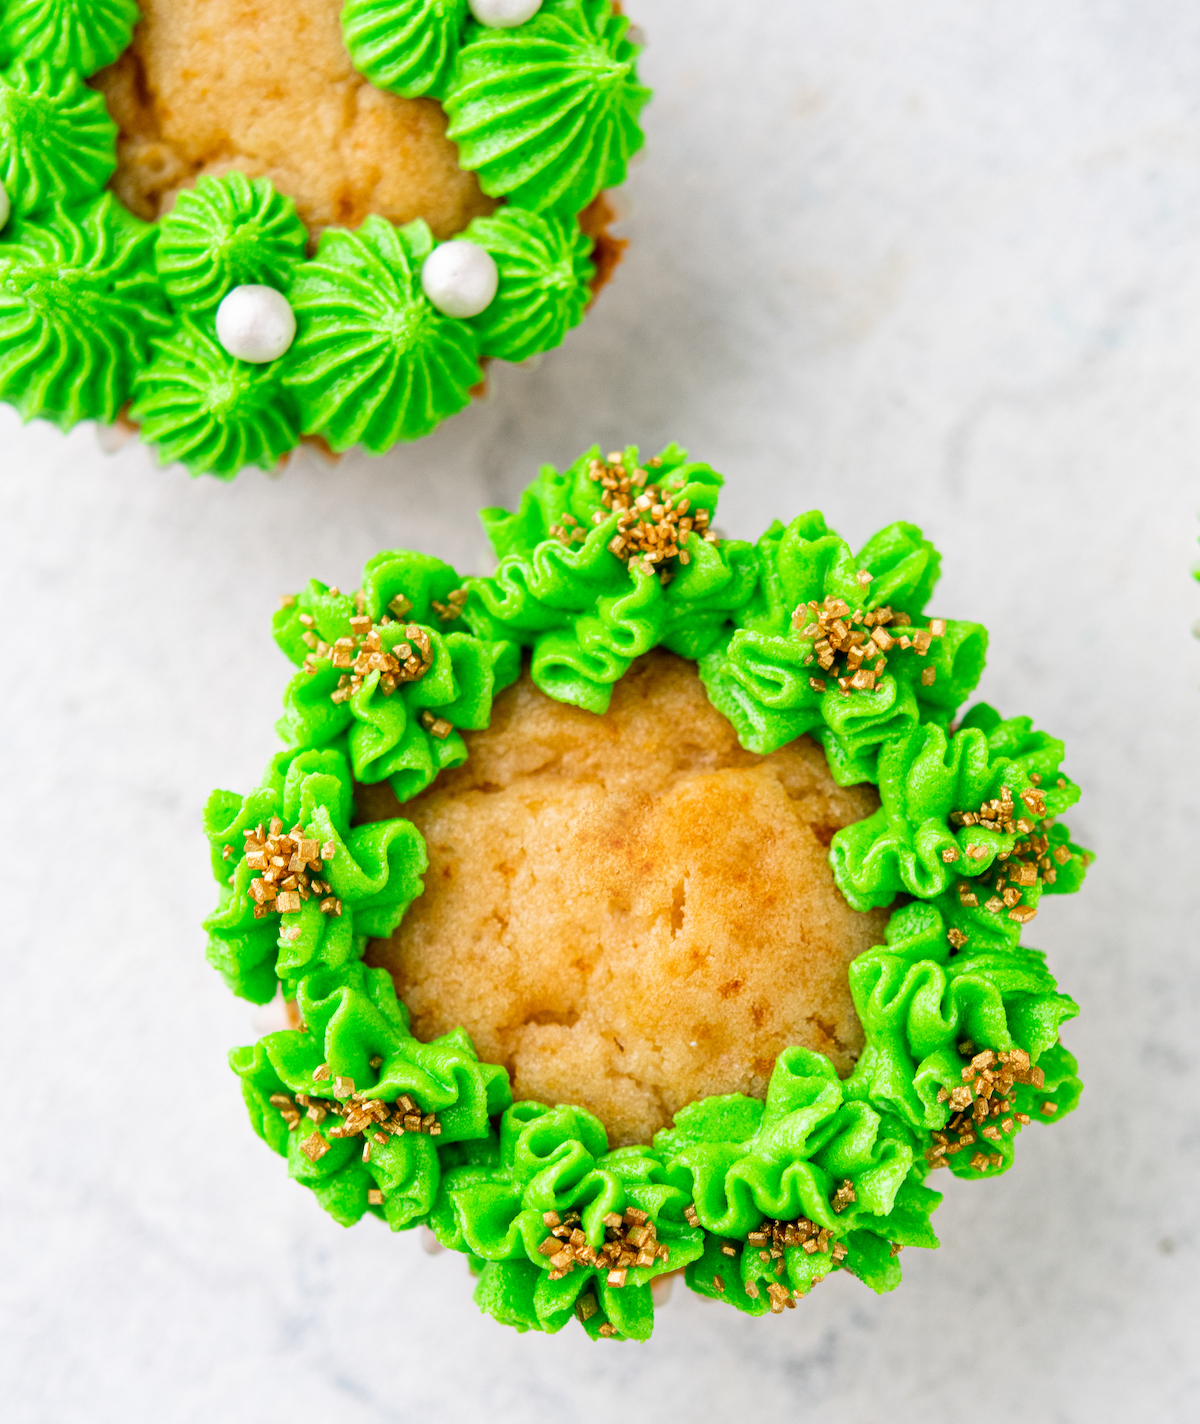 Iced cupcakes with a Christmas wreath design